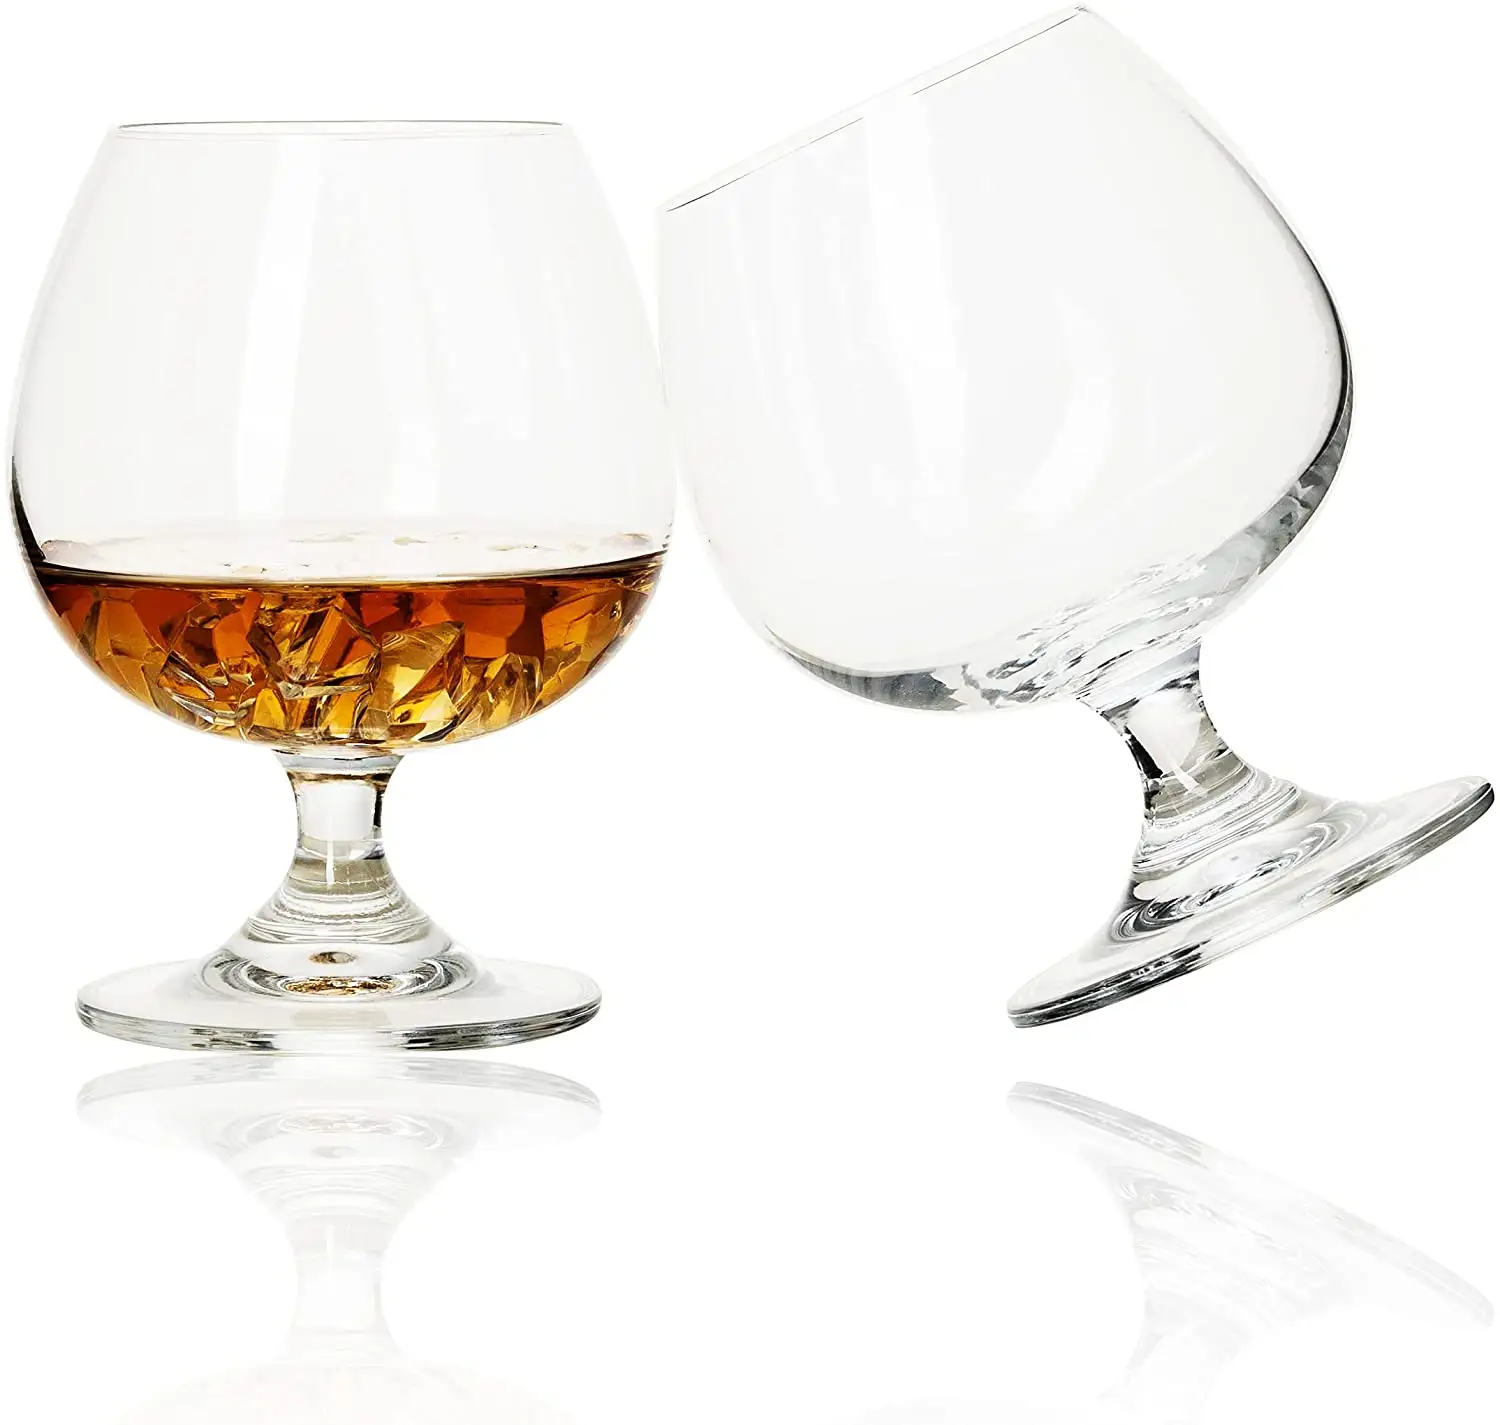 Jelas Kecil Kristal Cognac Minum Bir Mencicipi Brandy Snifters Gelas Pendek untuk Minuman Whiskey Bourbon Bir Susu